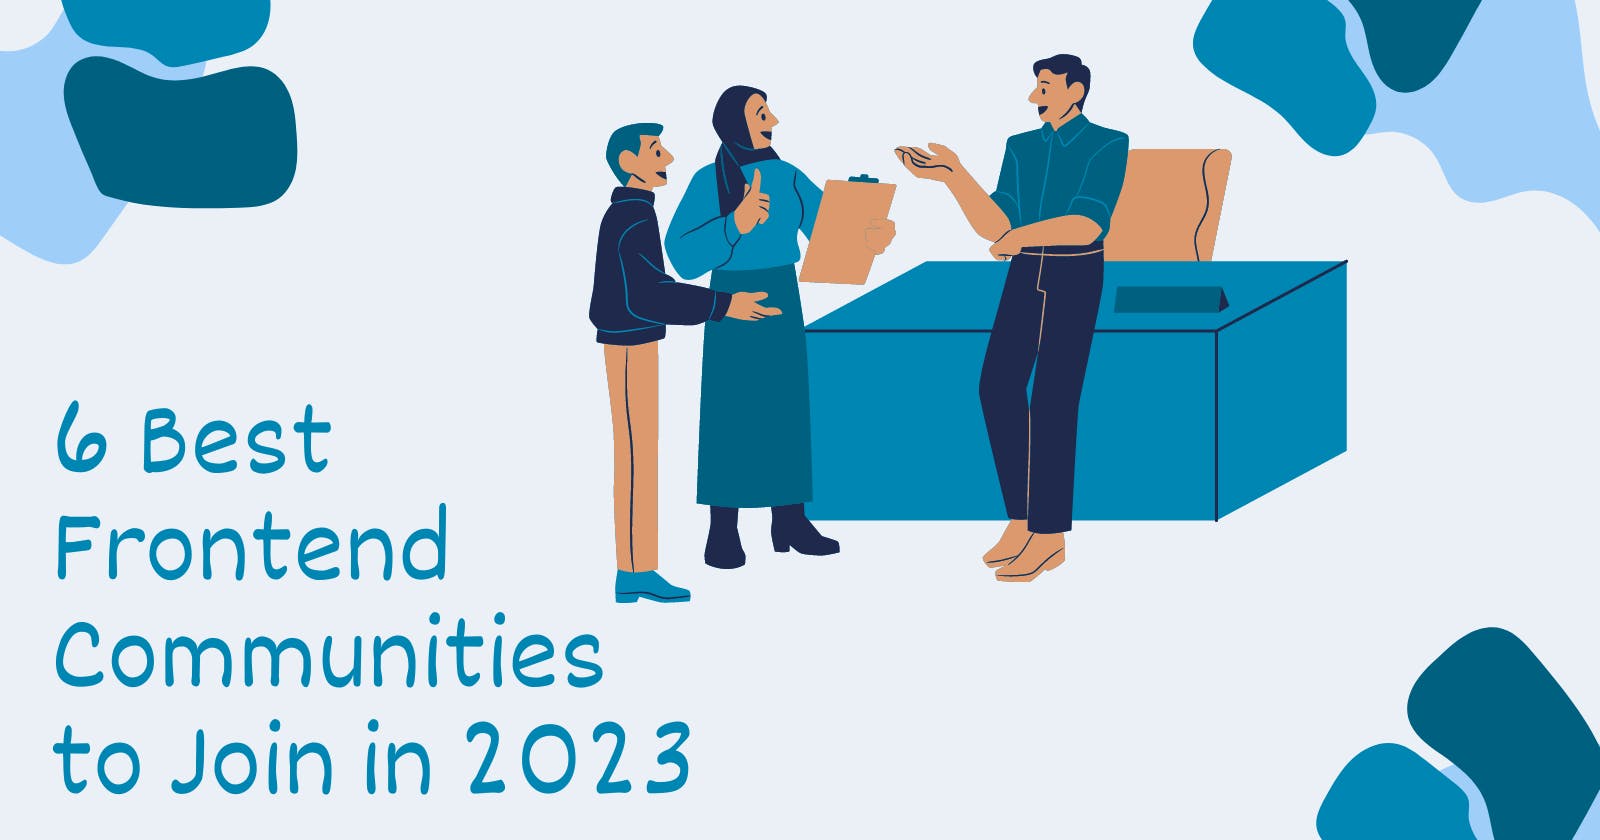 6 Best Frontend Communities to Join in 2023